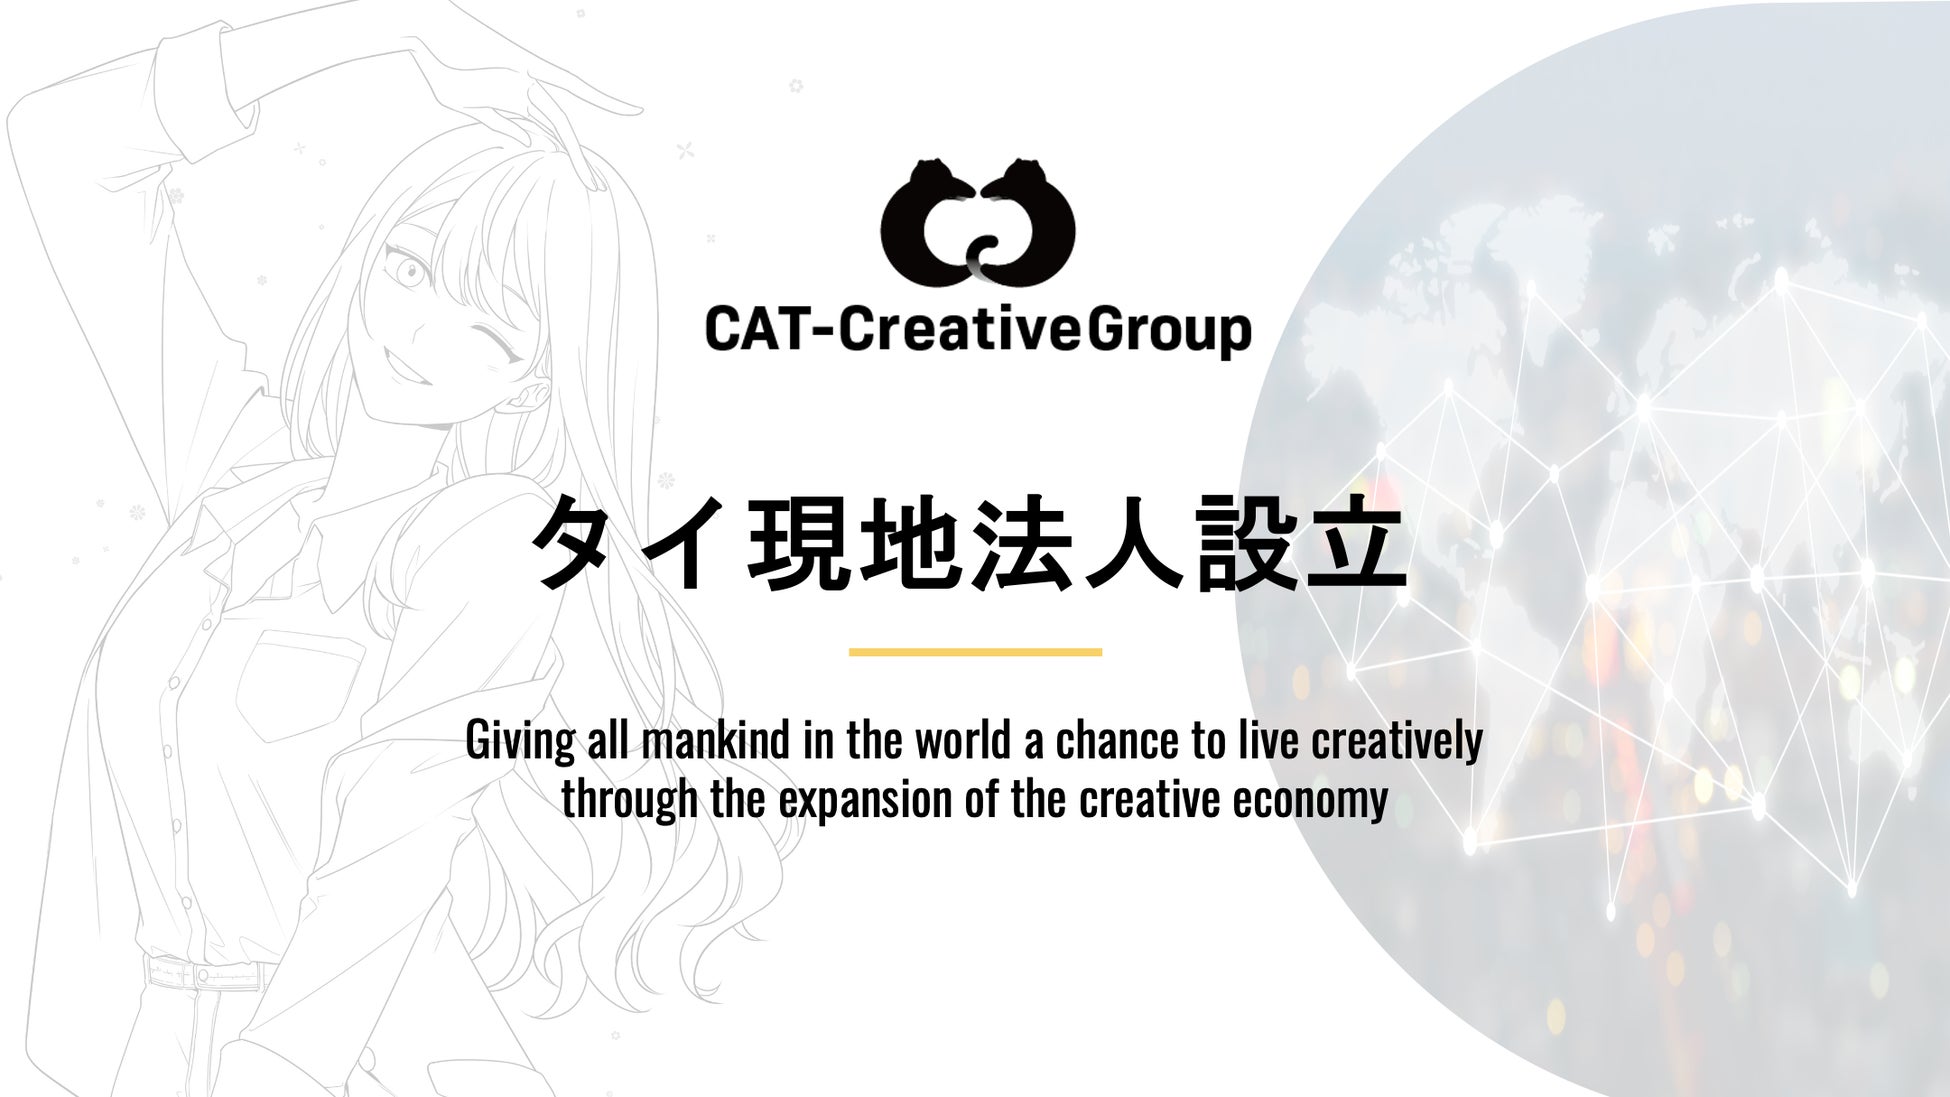 WEBTOON企画制作スタジオのCAT-CreativeGroup、タイ現地法人設立と組織体制強化